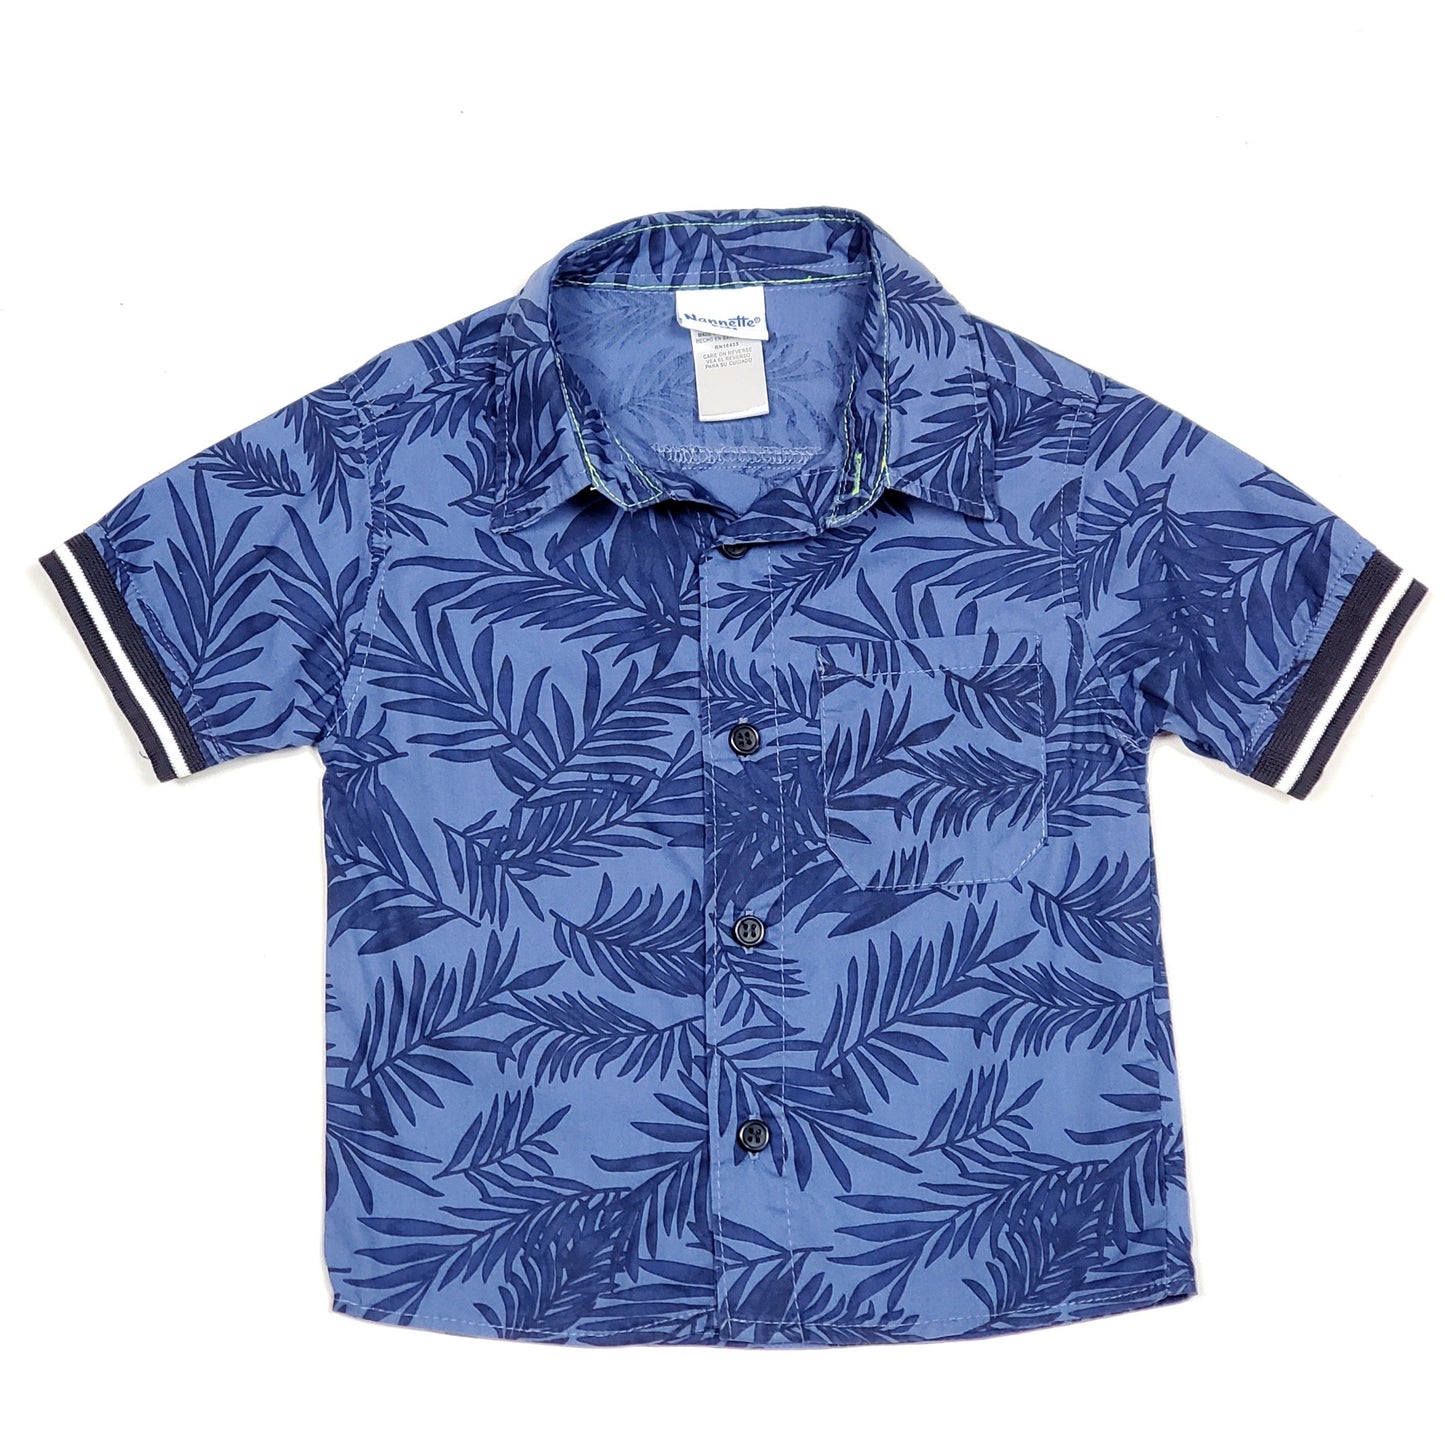 Nannette Boys Palm Leaf Print Shirt 2T Used View 1